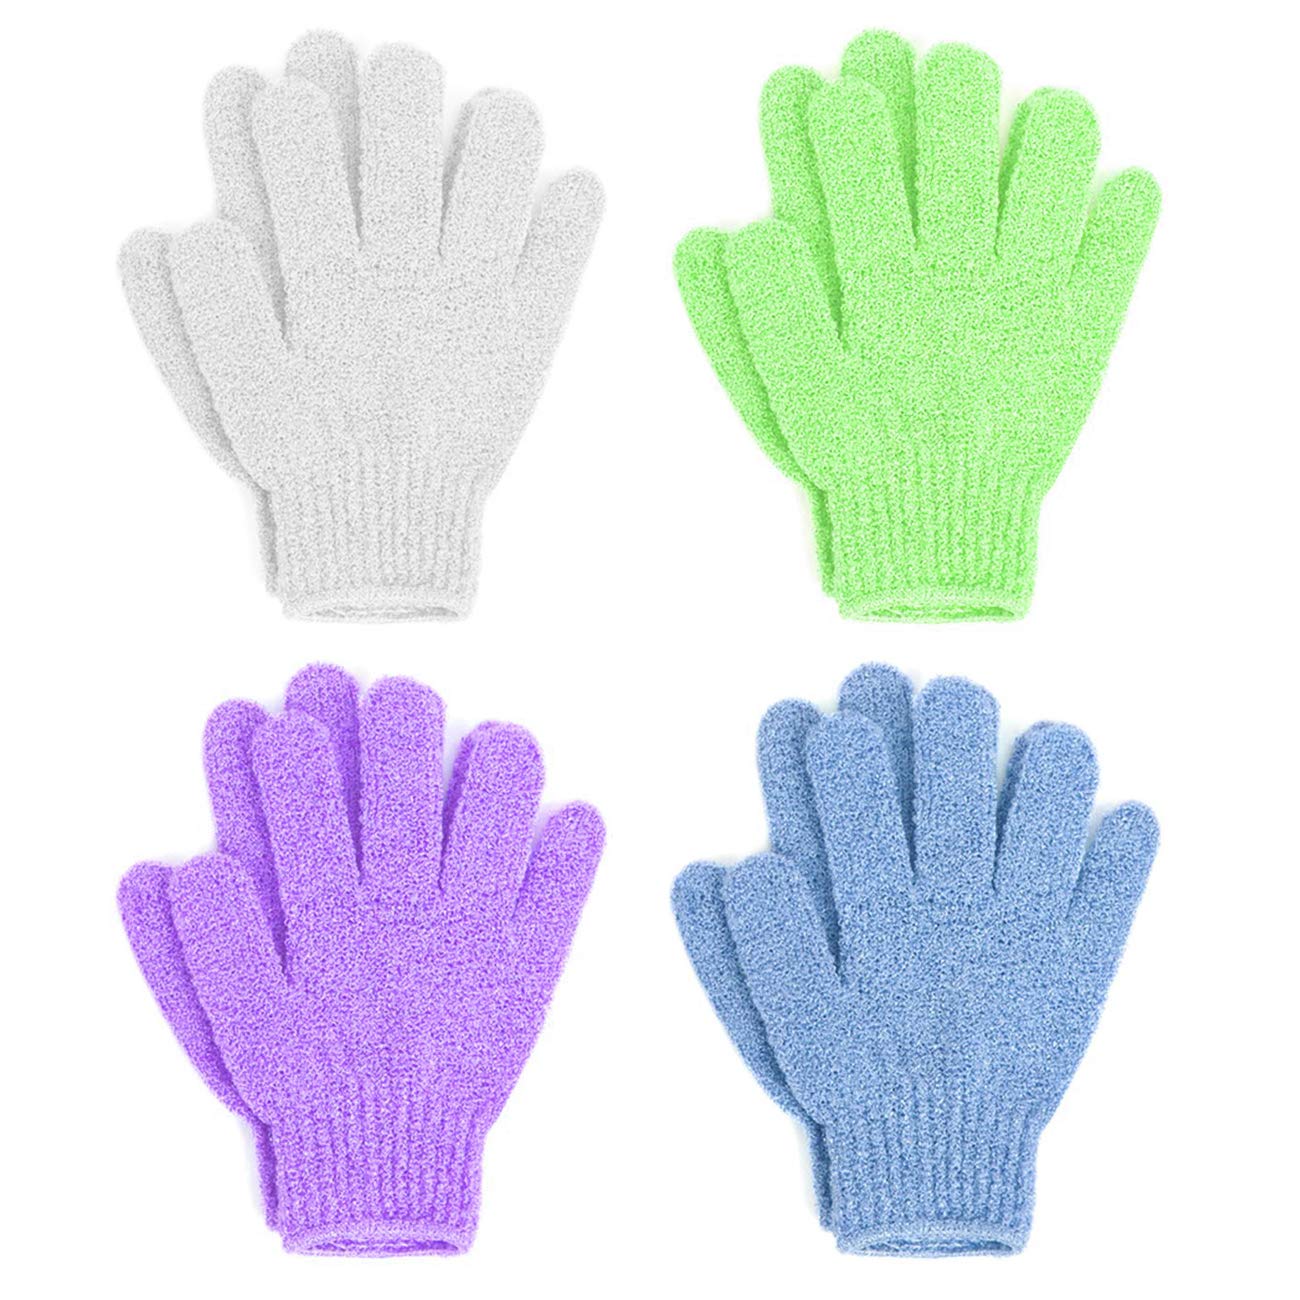 Linda Exfoliating Bath Gloves, Pack of 4